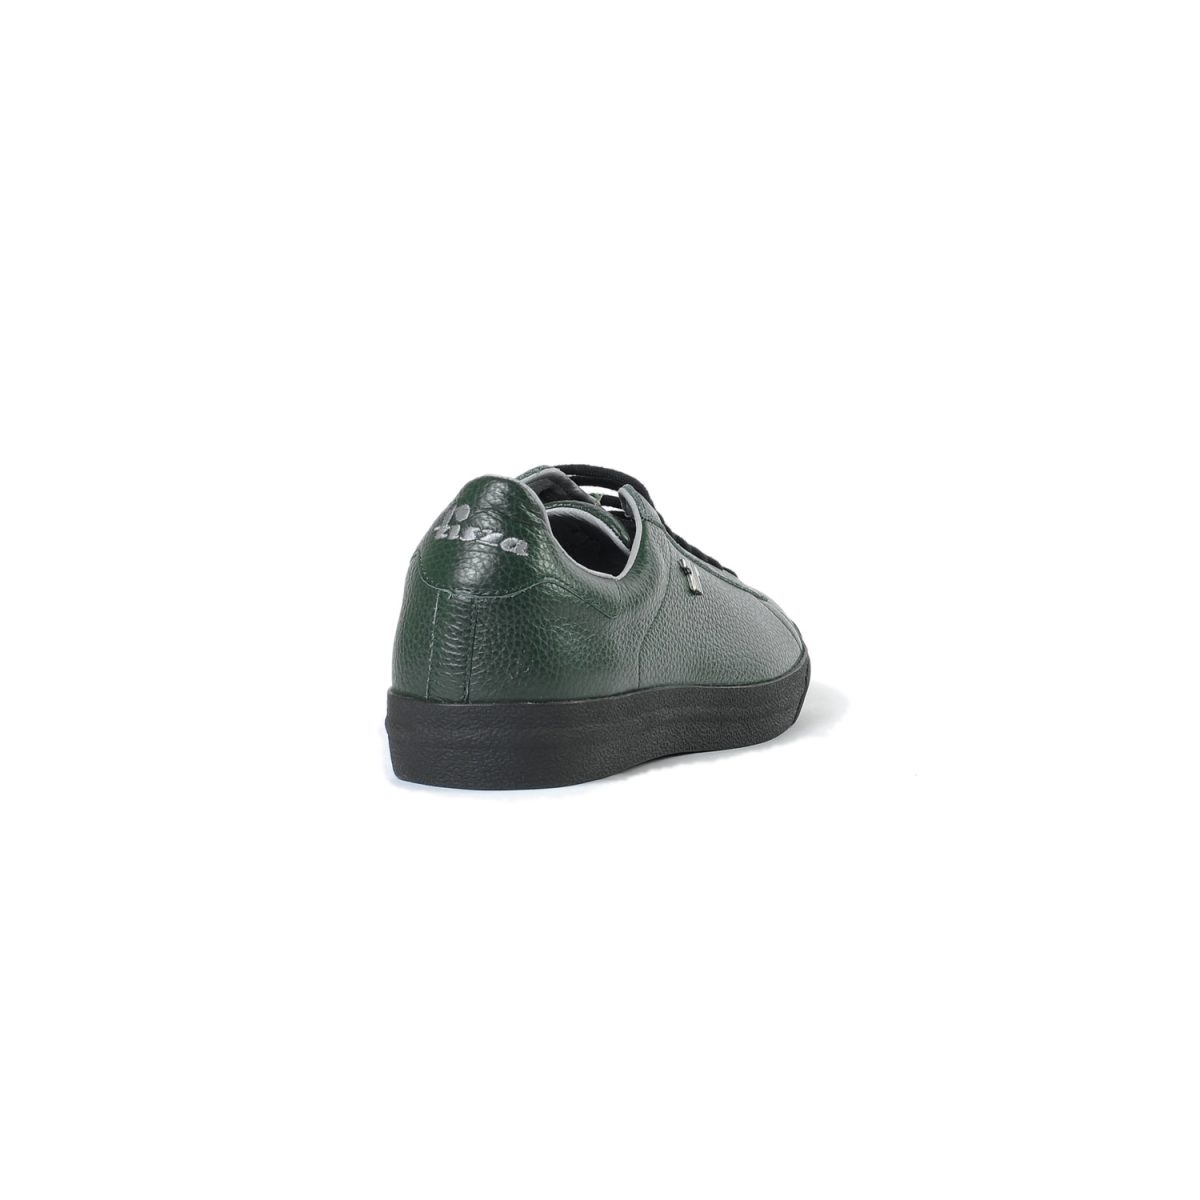 Tisza shoes - Simple - Dark green